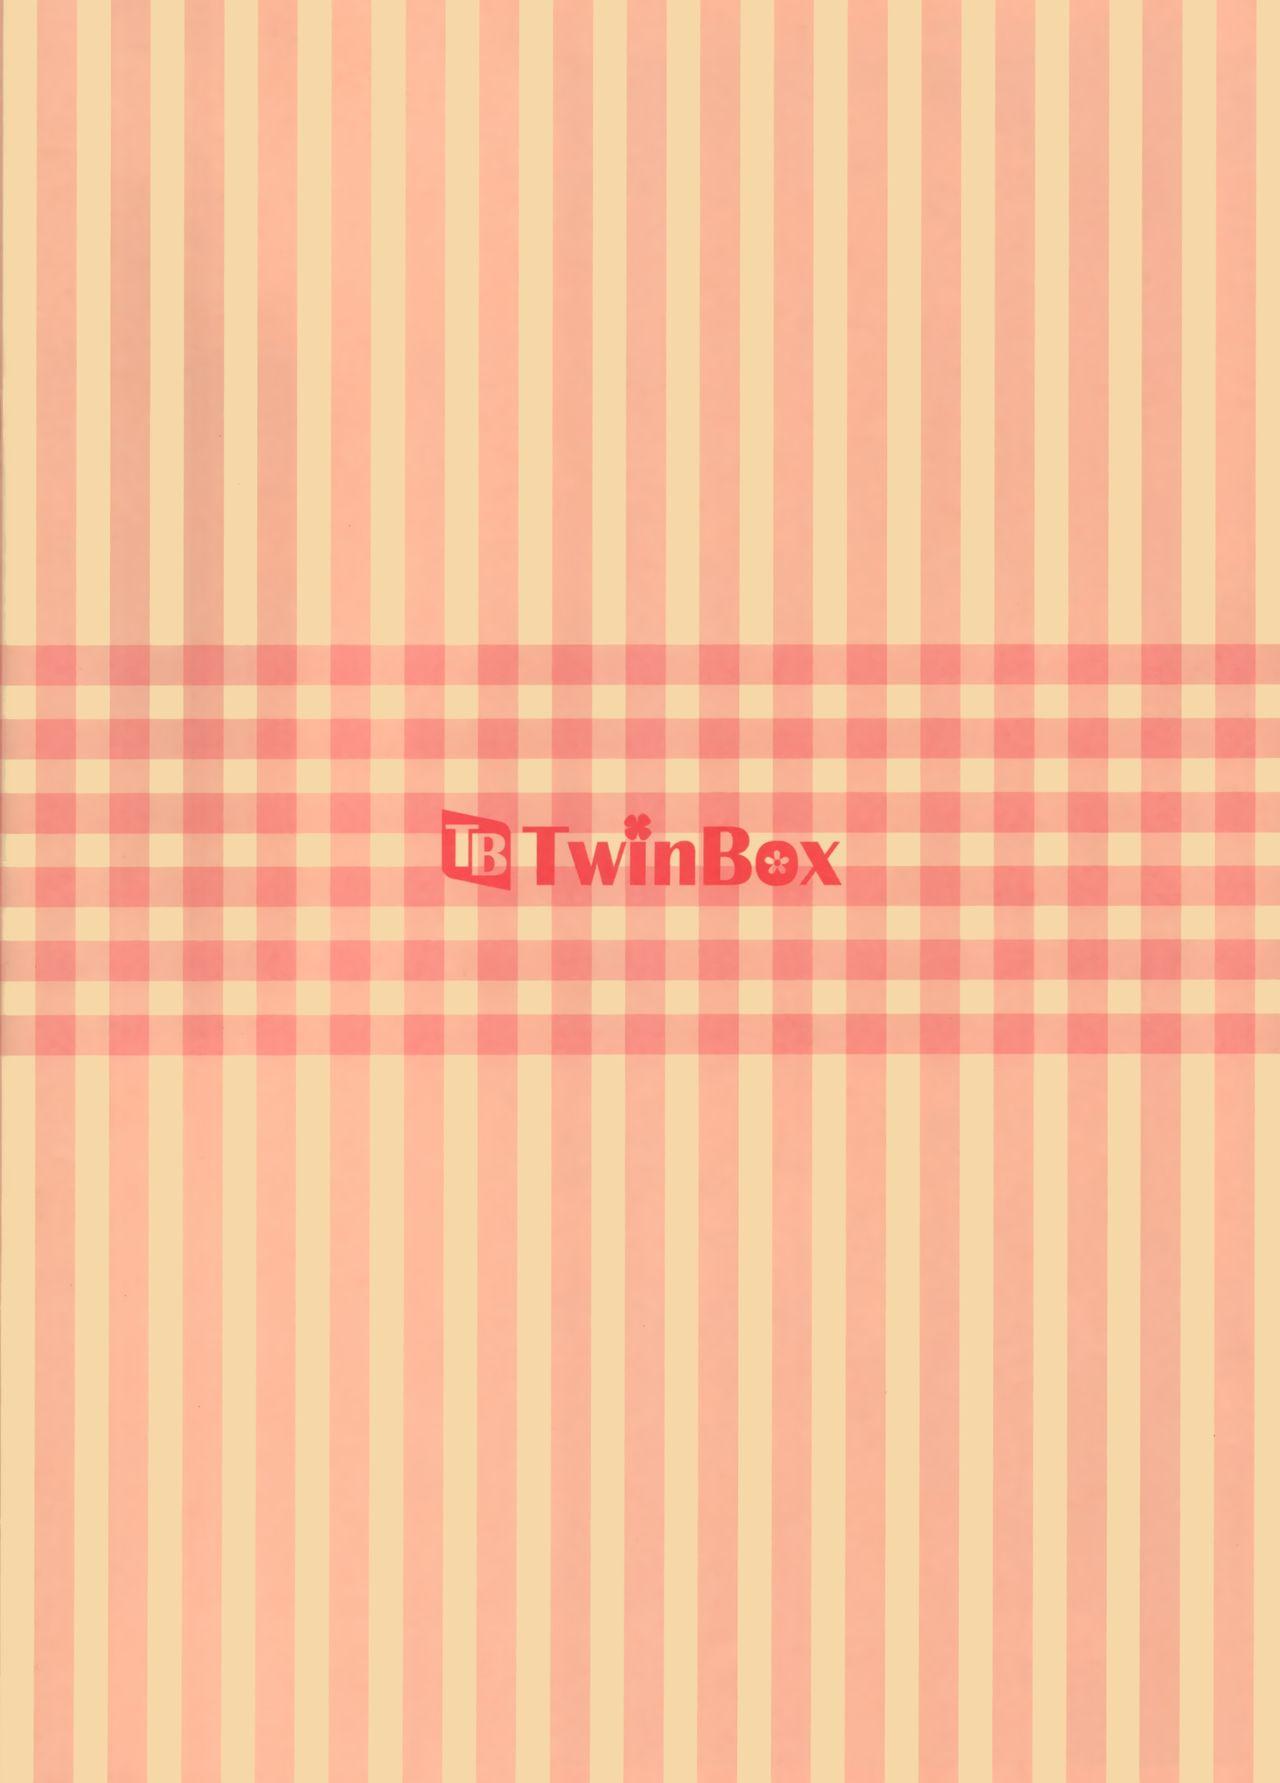 TwinBOOKs08 10